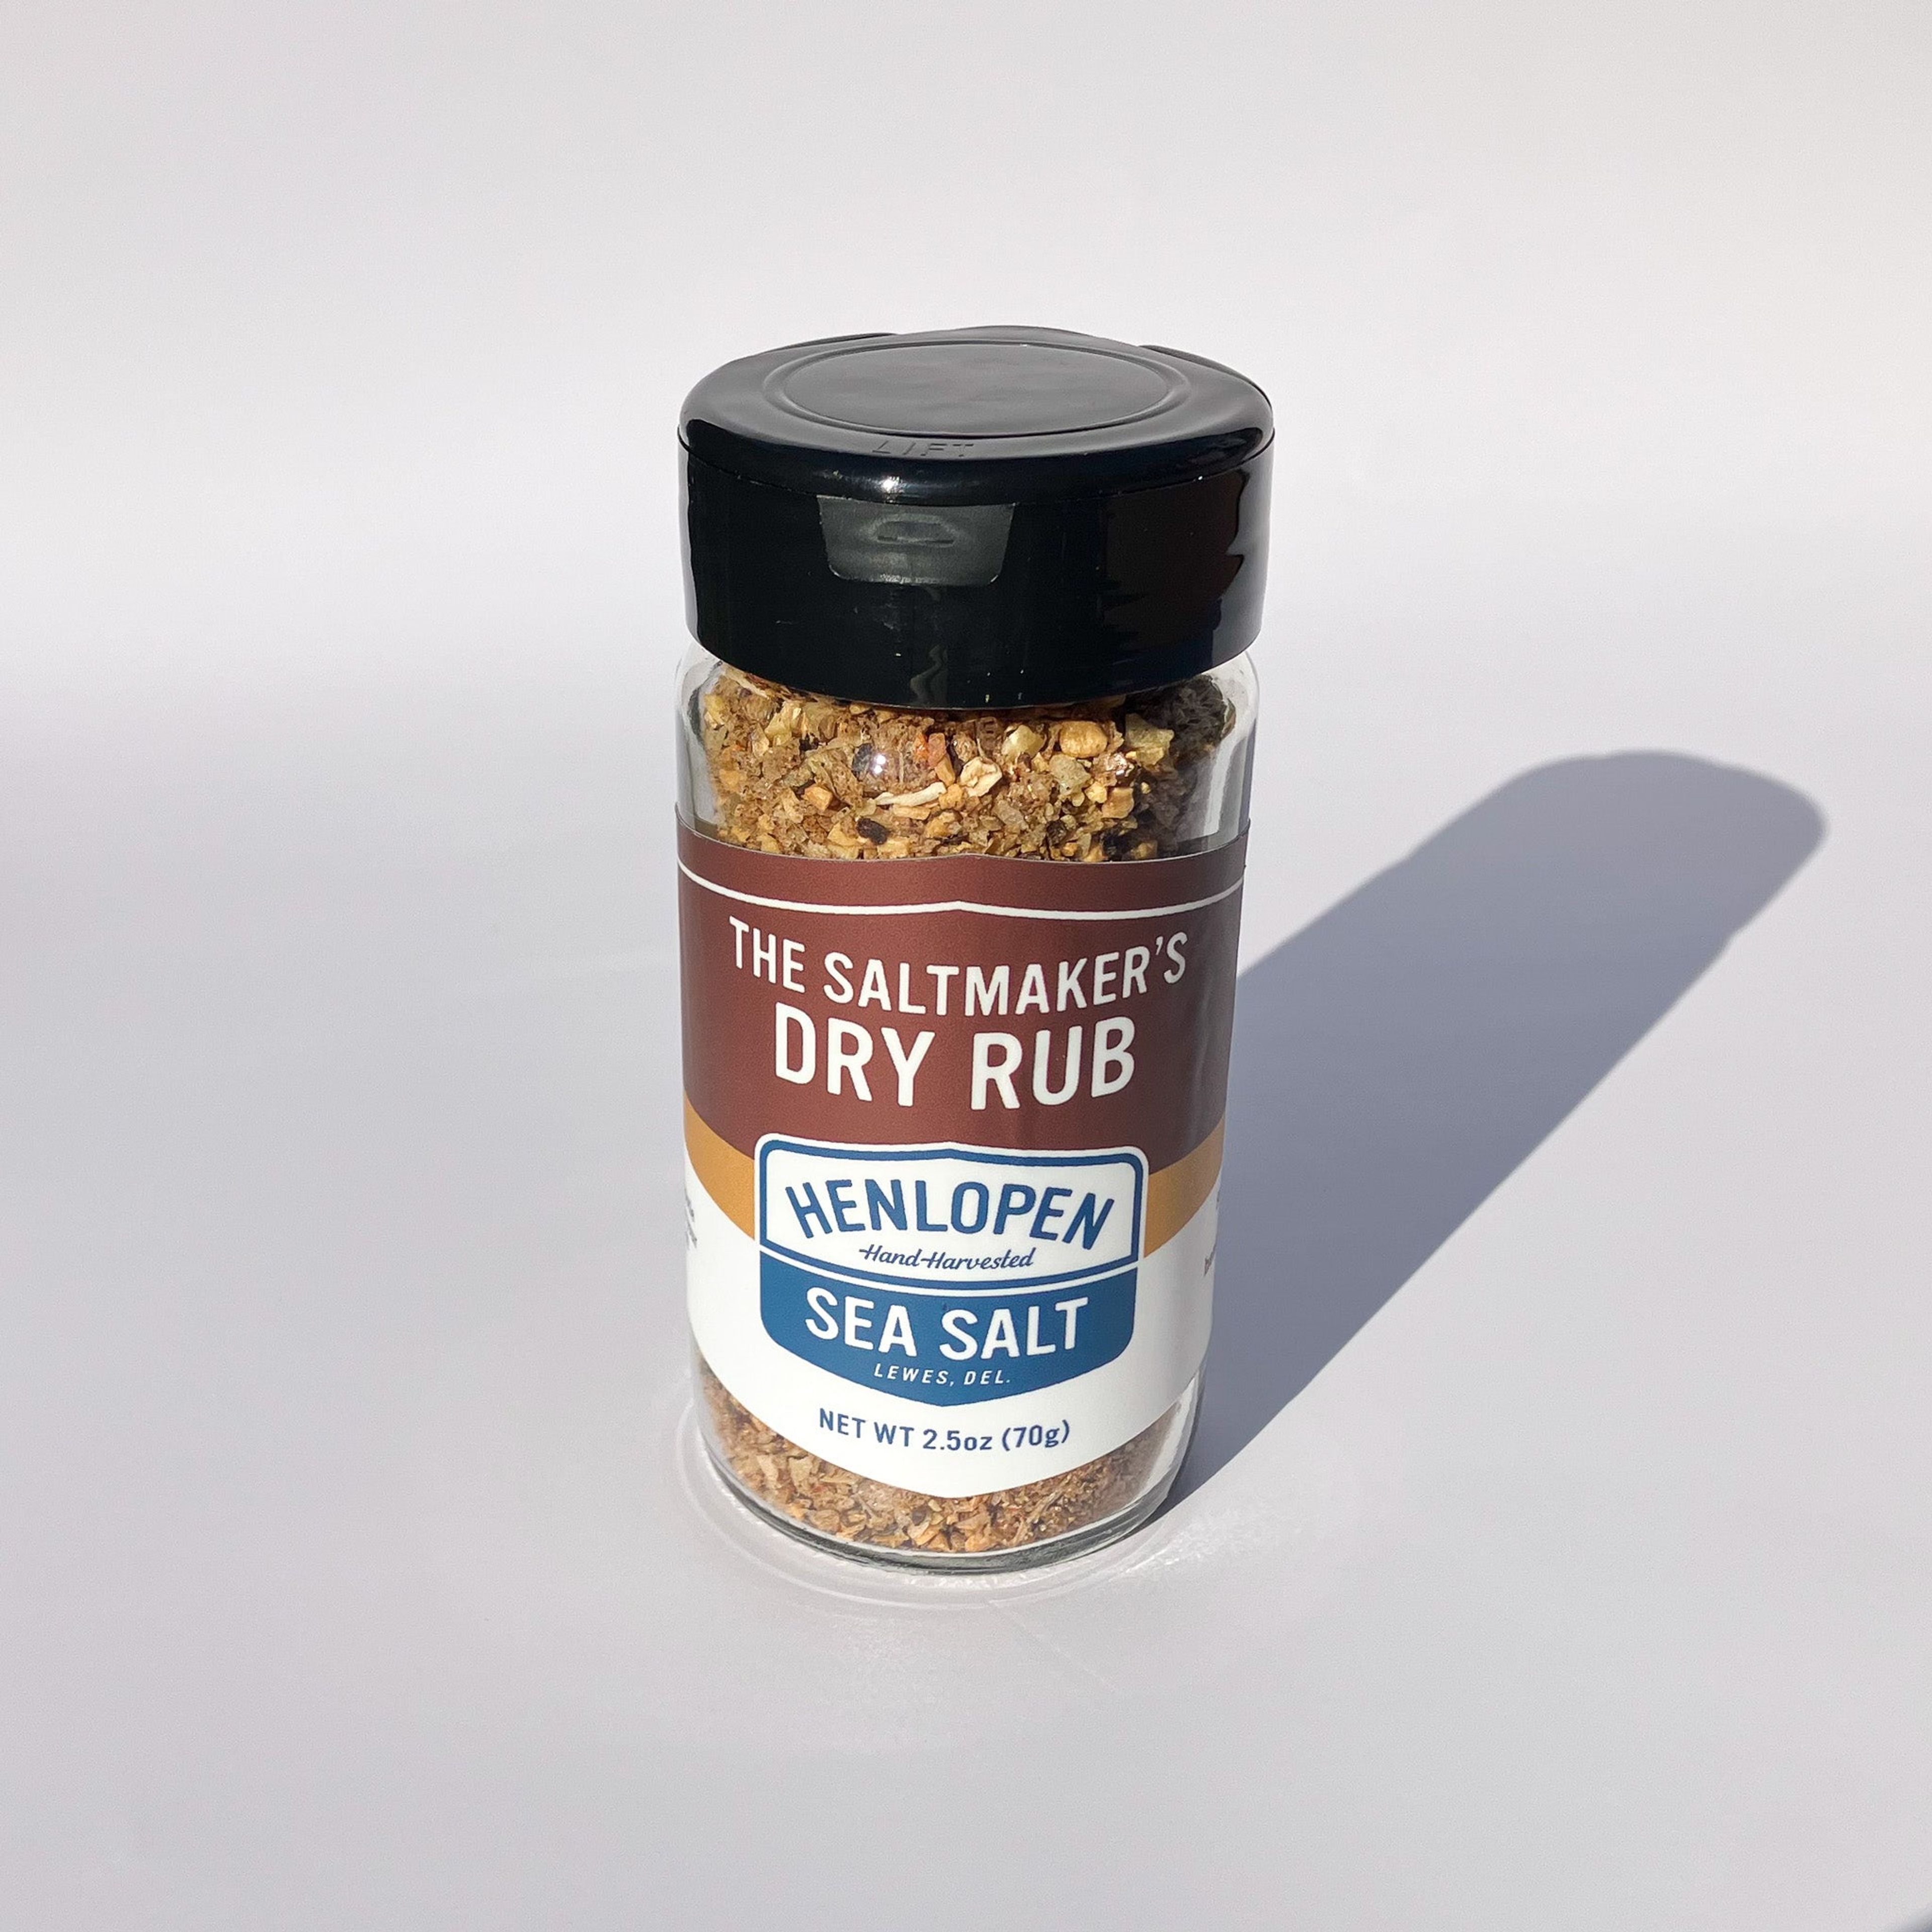 The Saltmaker's Dry Rub